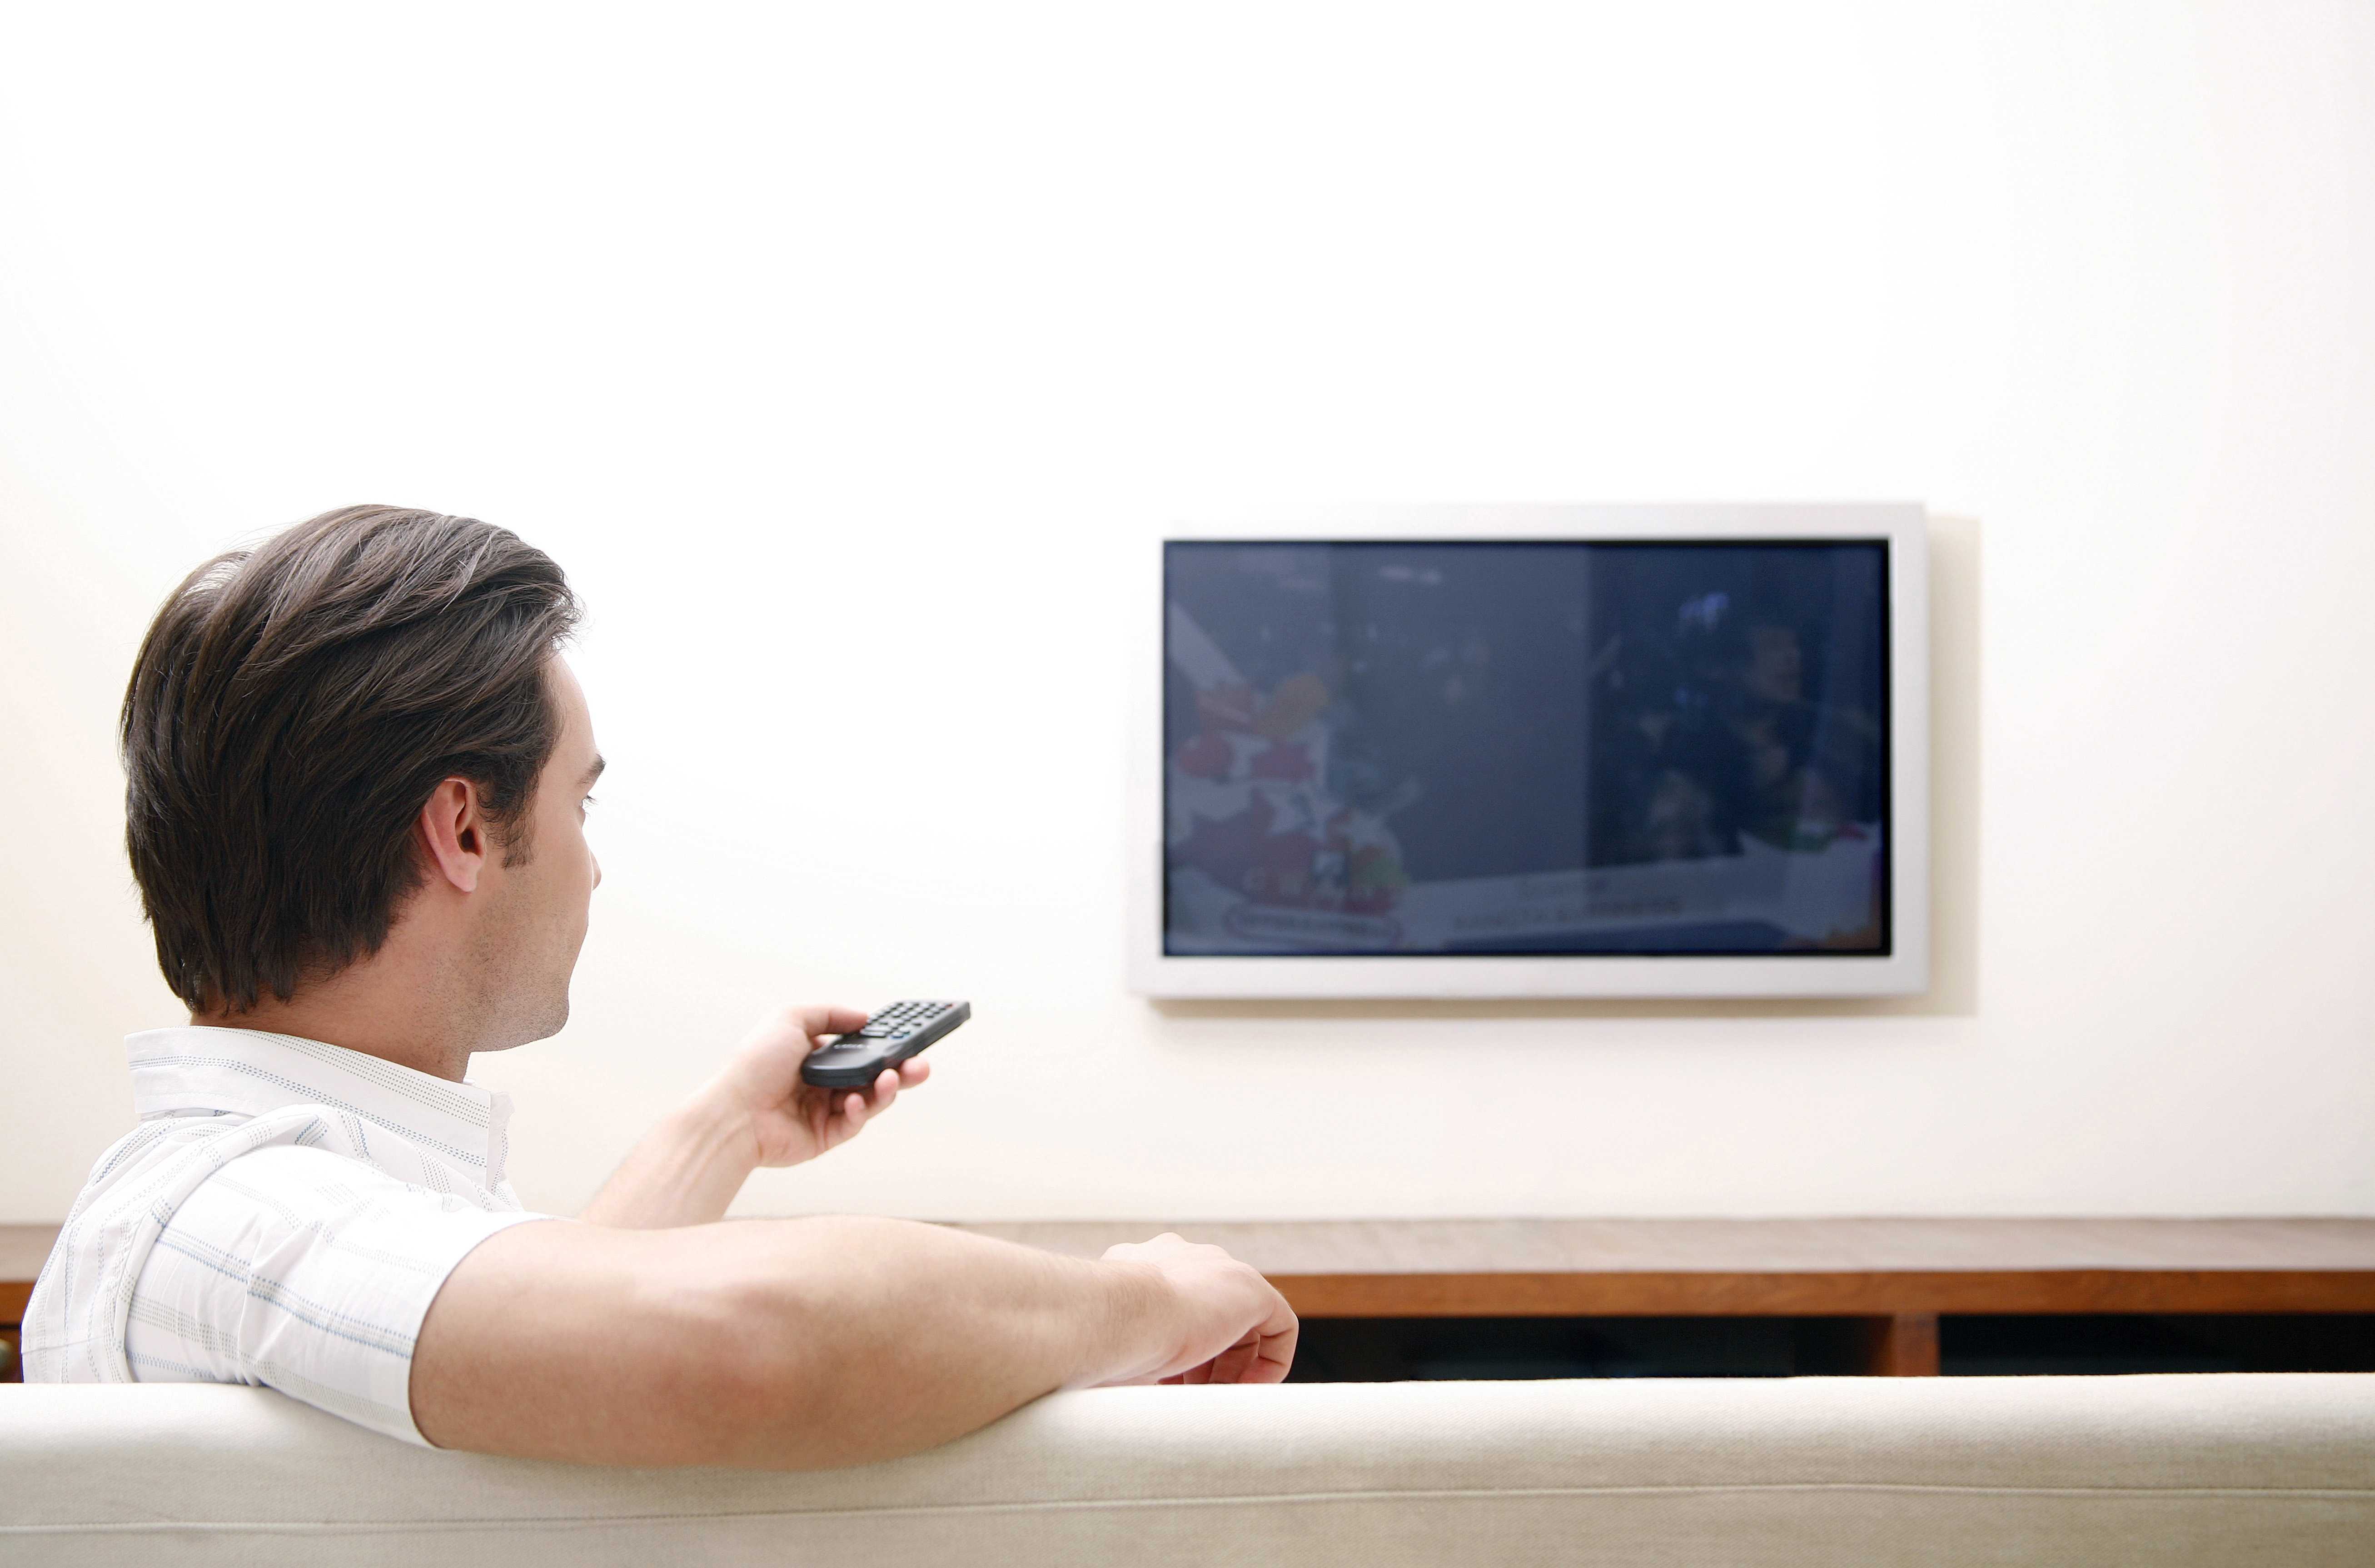 Проверка телевизора на битые пиксели при покупке и в домашних условиях